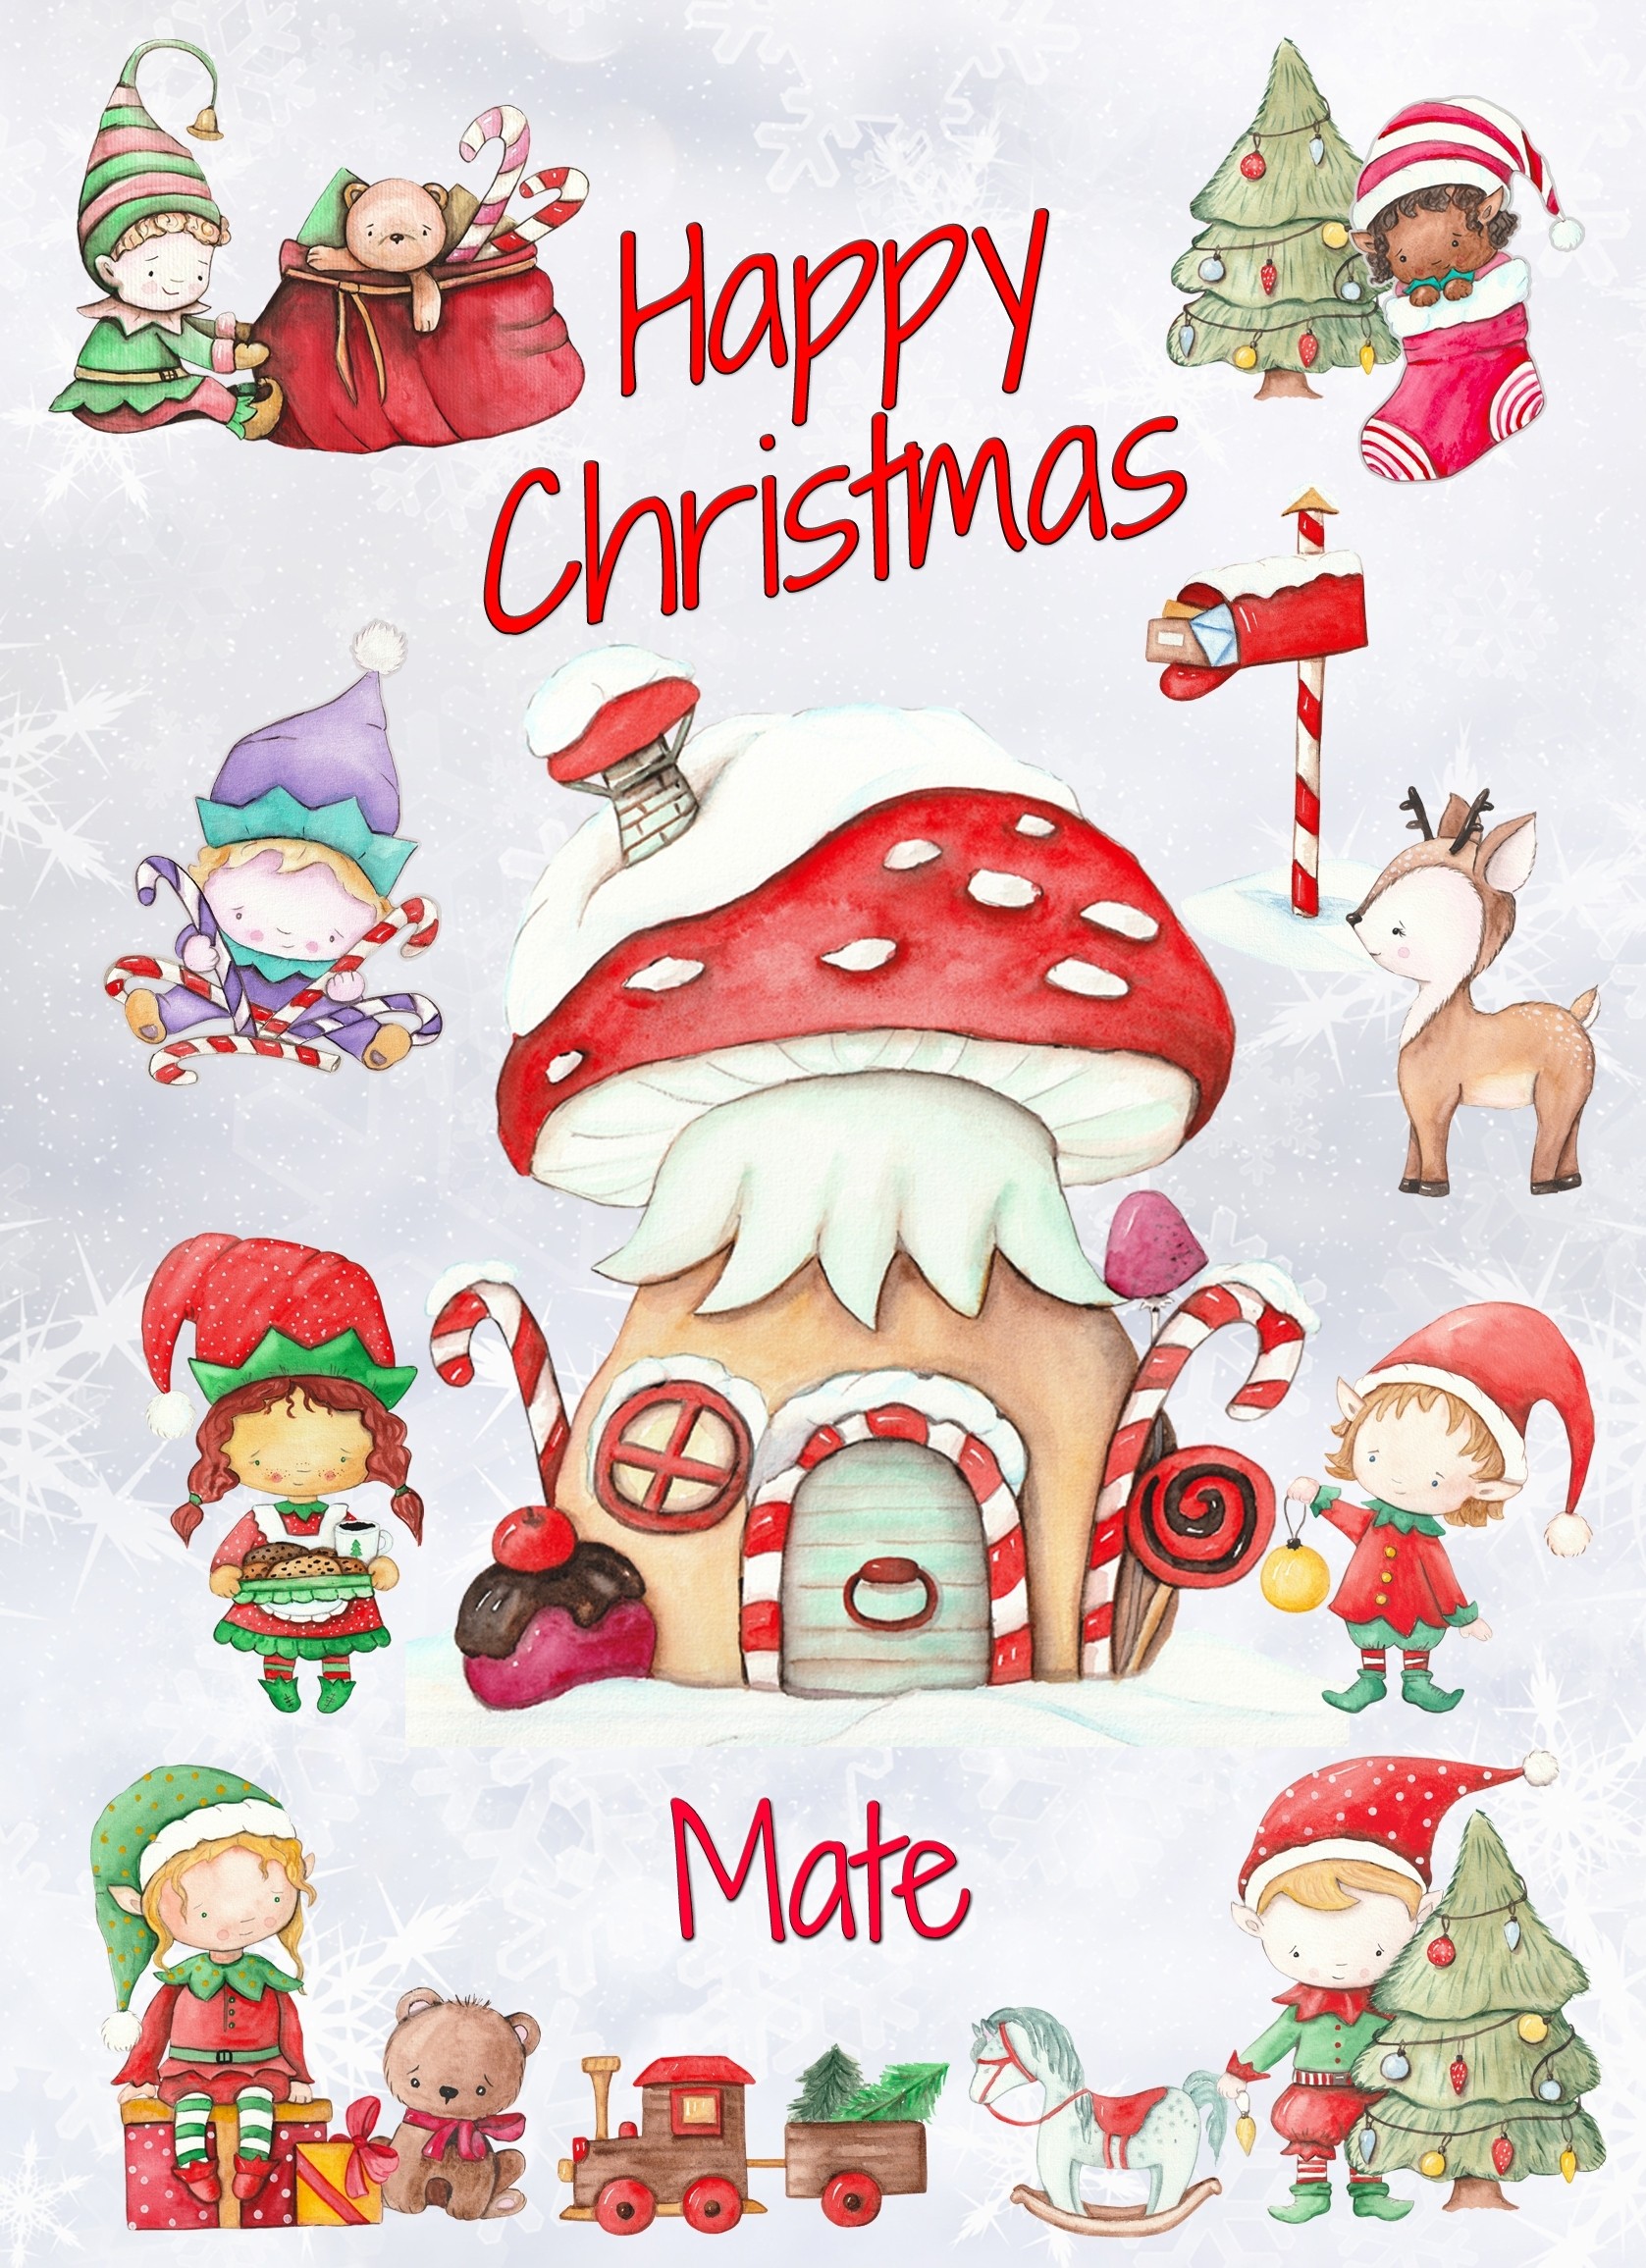 Christmas Card For Mate (Elf, White)